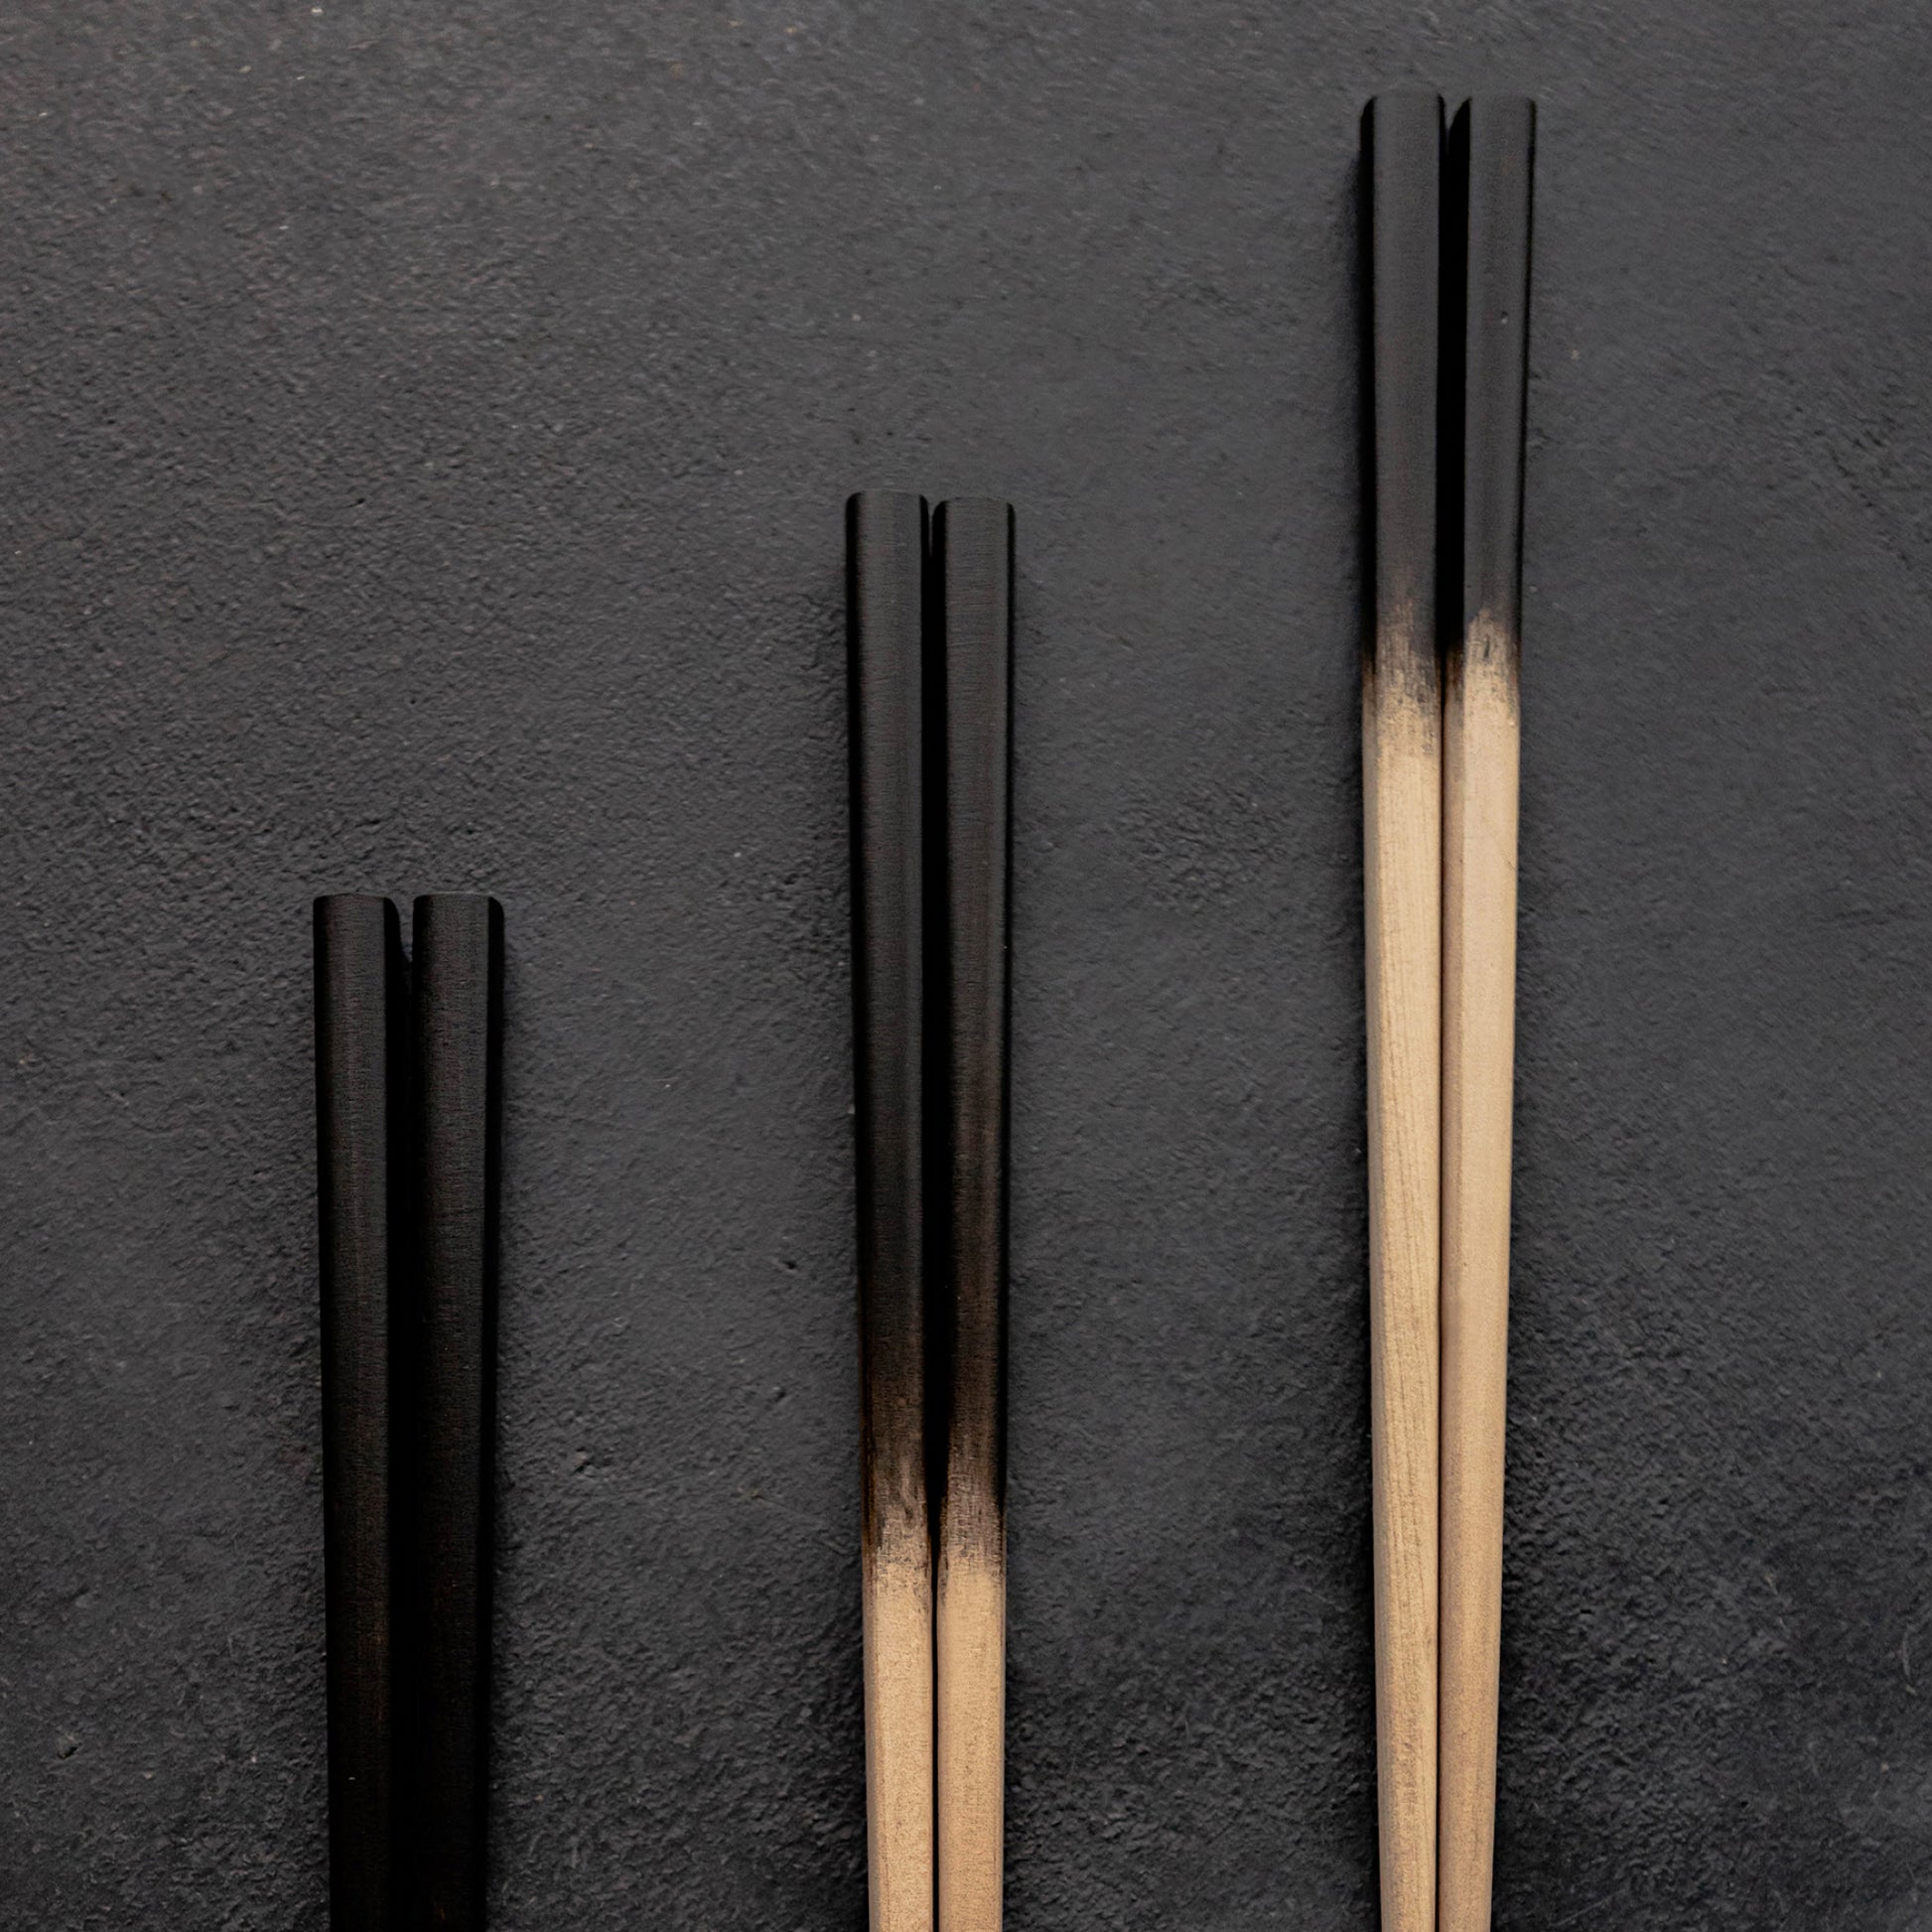 Chopsticks treated with fukiurushi